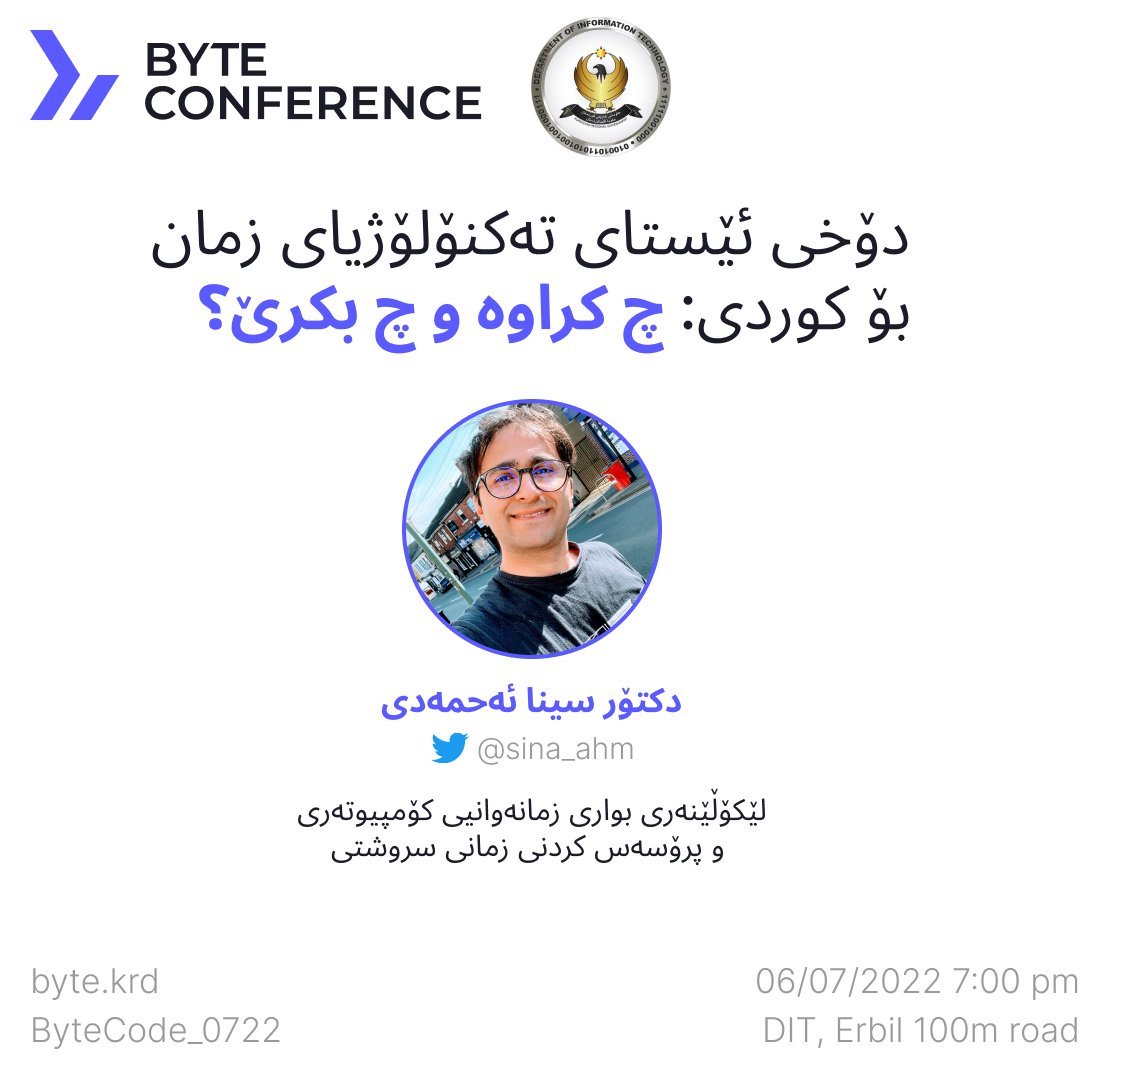 Sina Ahmadi's talk at the Department of Information Technology